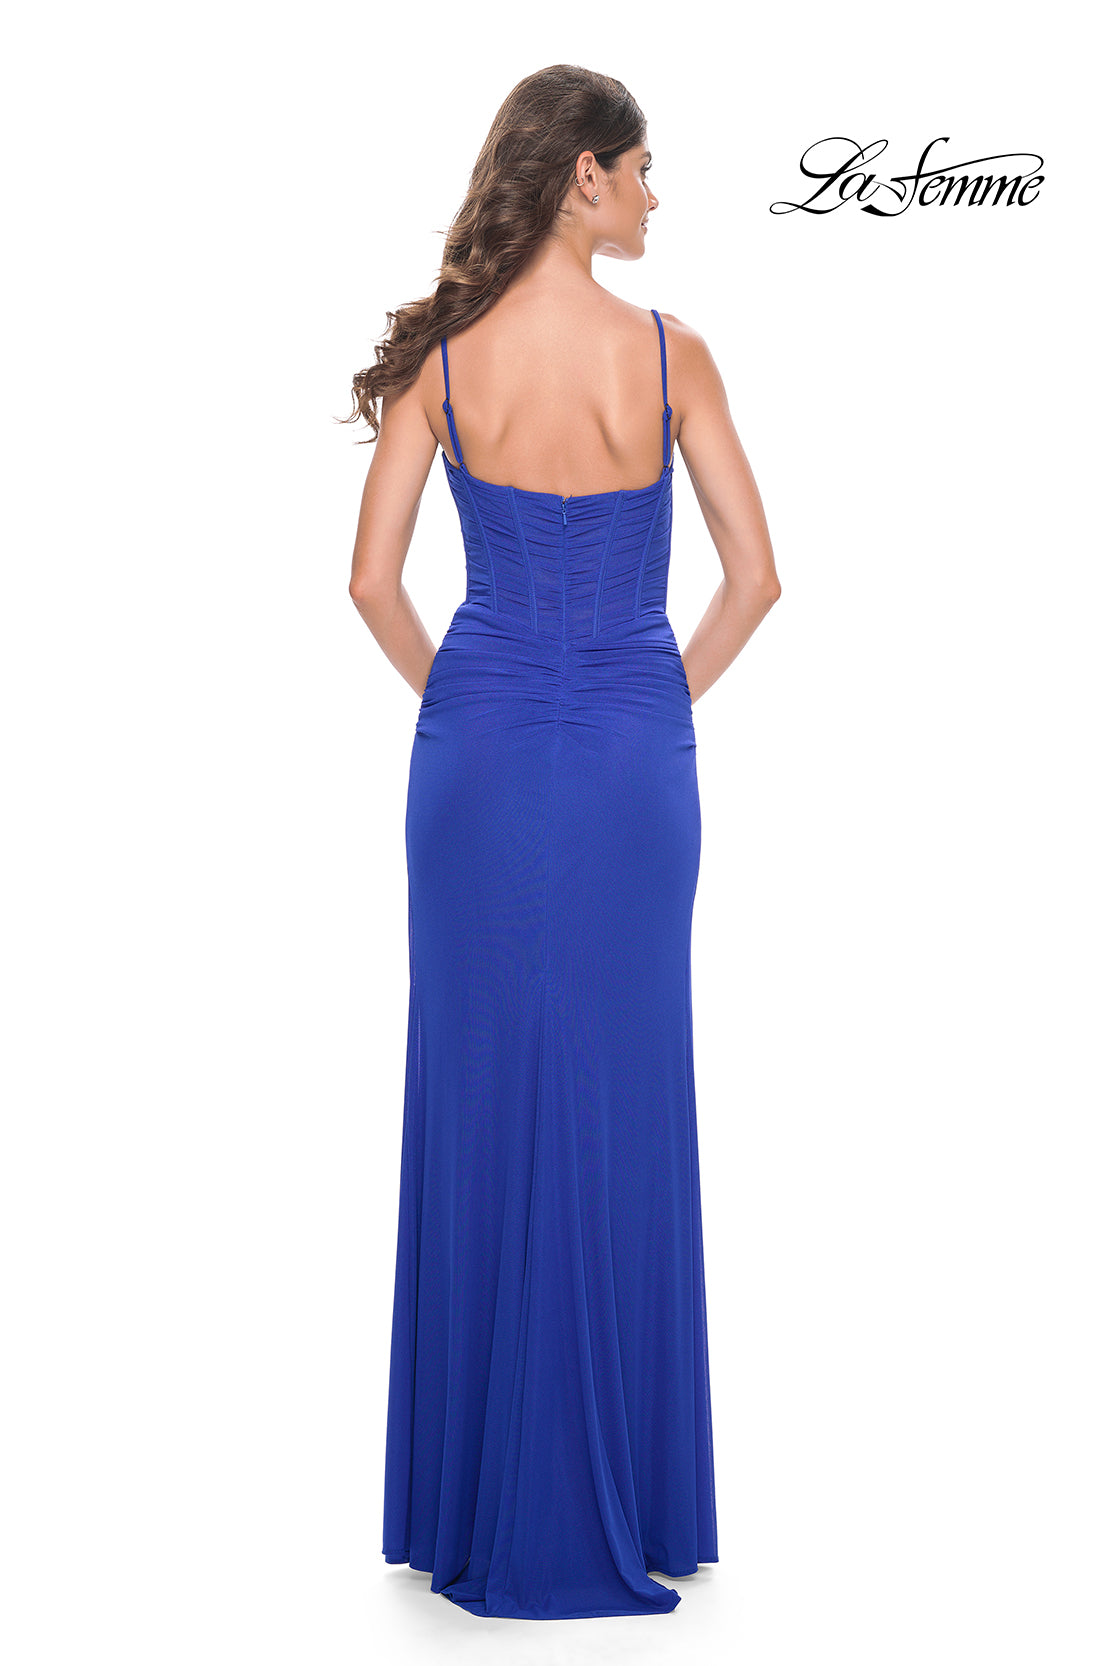 La-Femme-32239-V-Neck-Neckline-Zipper-Back-High-Slit-Net-Jersey-Fitted-Royal-Blue-Evening-Dress-B-Chic-Fashions-Prom-Dress